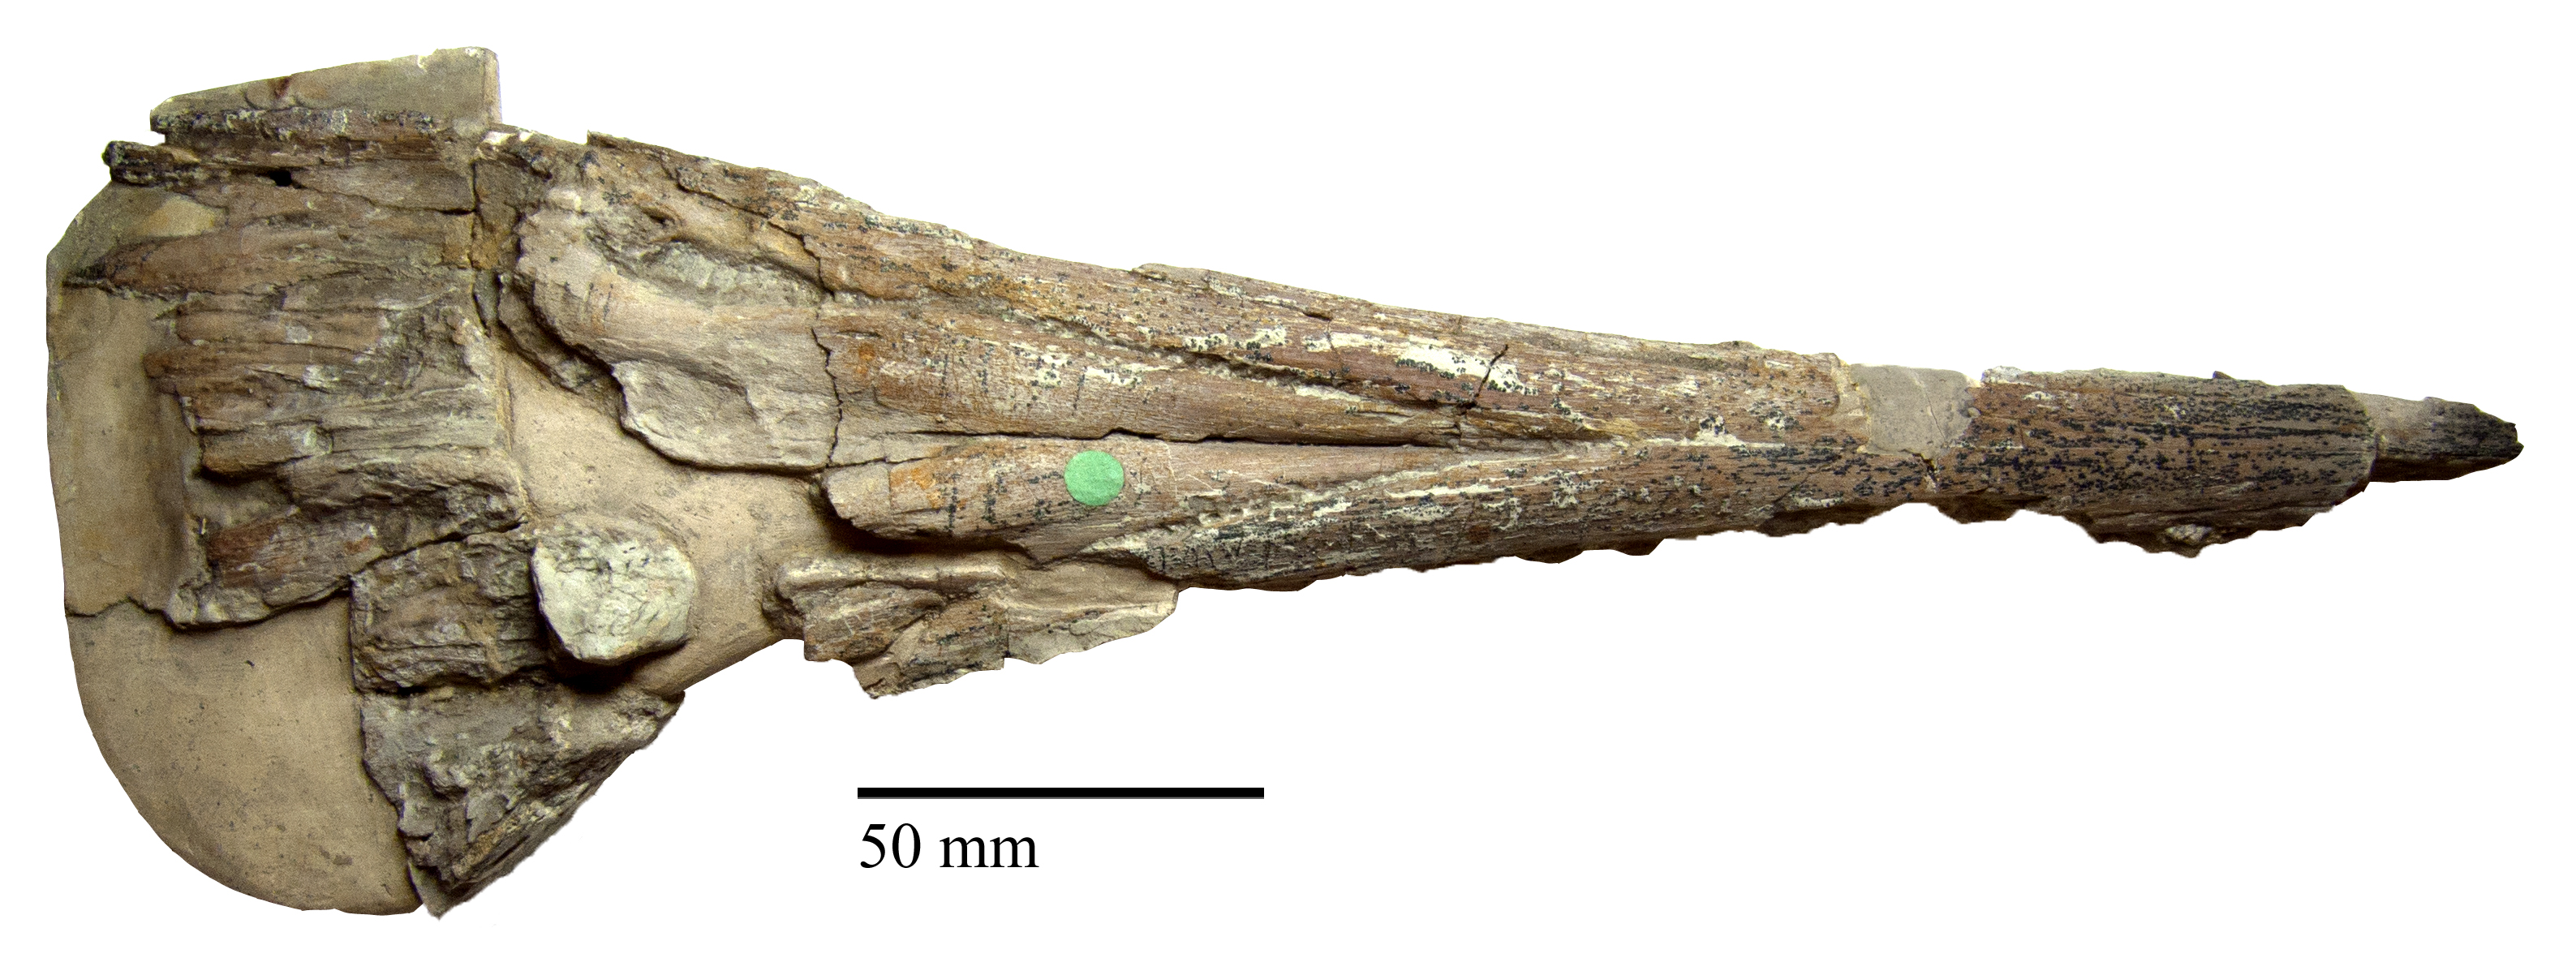 Ichthyosaurus leptospondylus in NHMUK